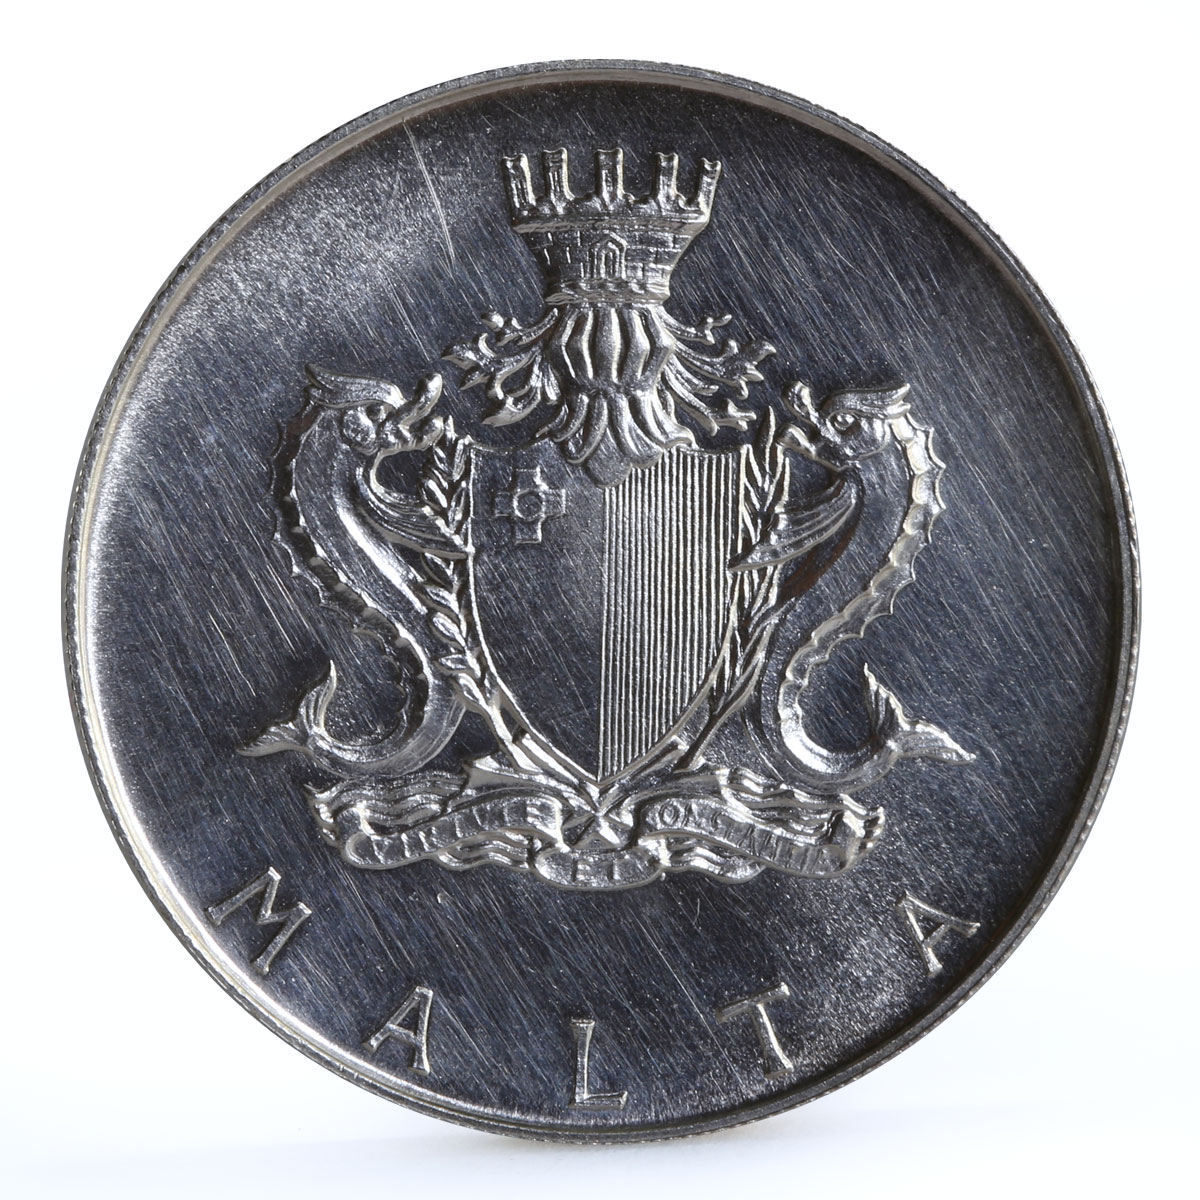 Malta 1 lira Famous People Philosopher Socialist Manwel Dimech silver coin 1972